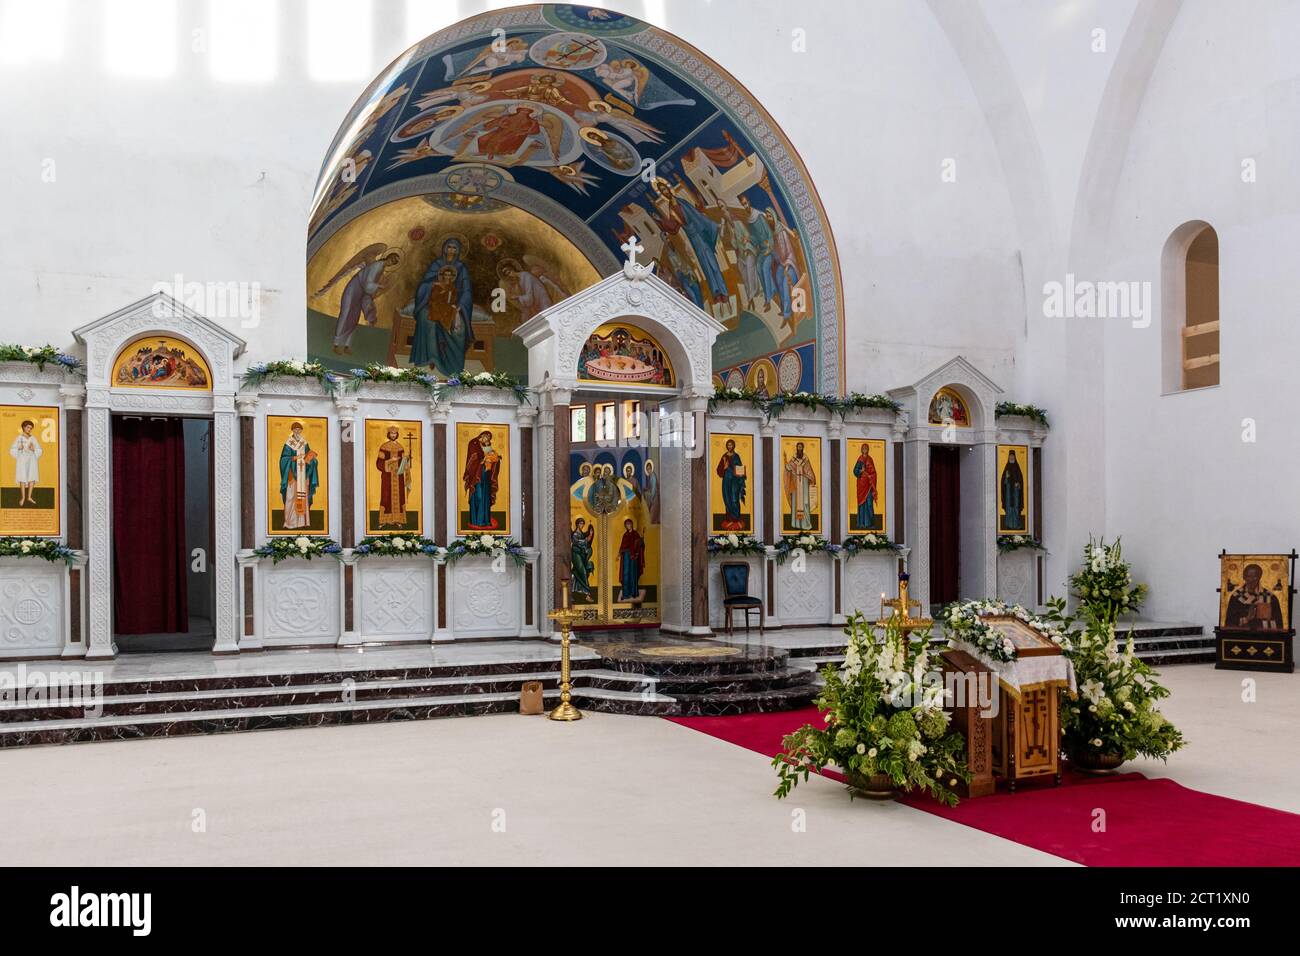 Warsaw, Poland - September 20, 2020: The Orthodox Church St. Sofia of  Divine Wisdom (Hagia Sofia). View of Iconostasis Stock Photo - Alamy